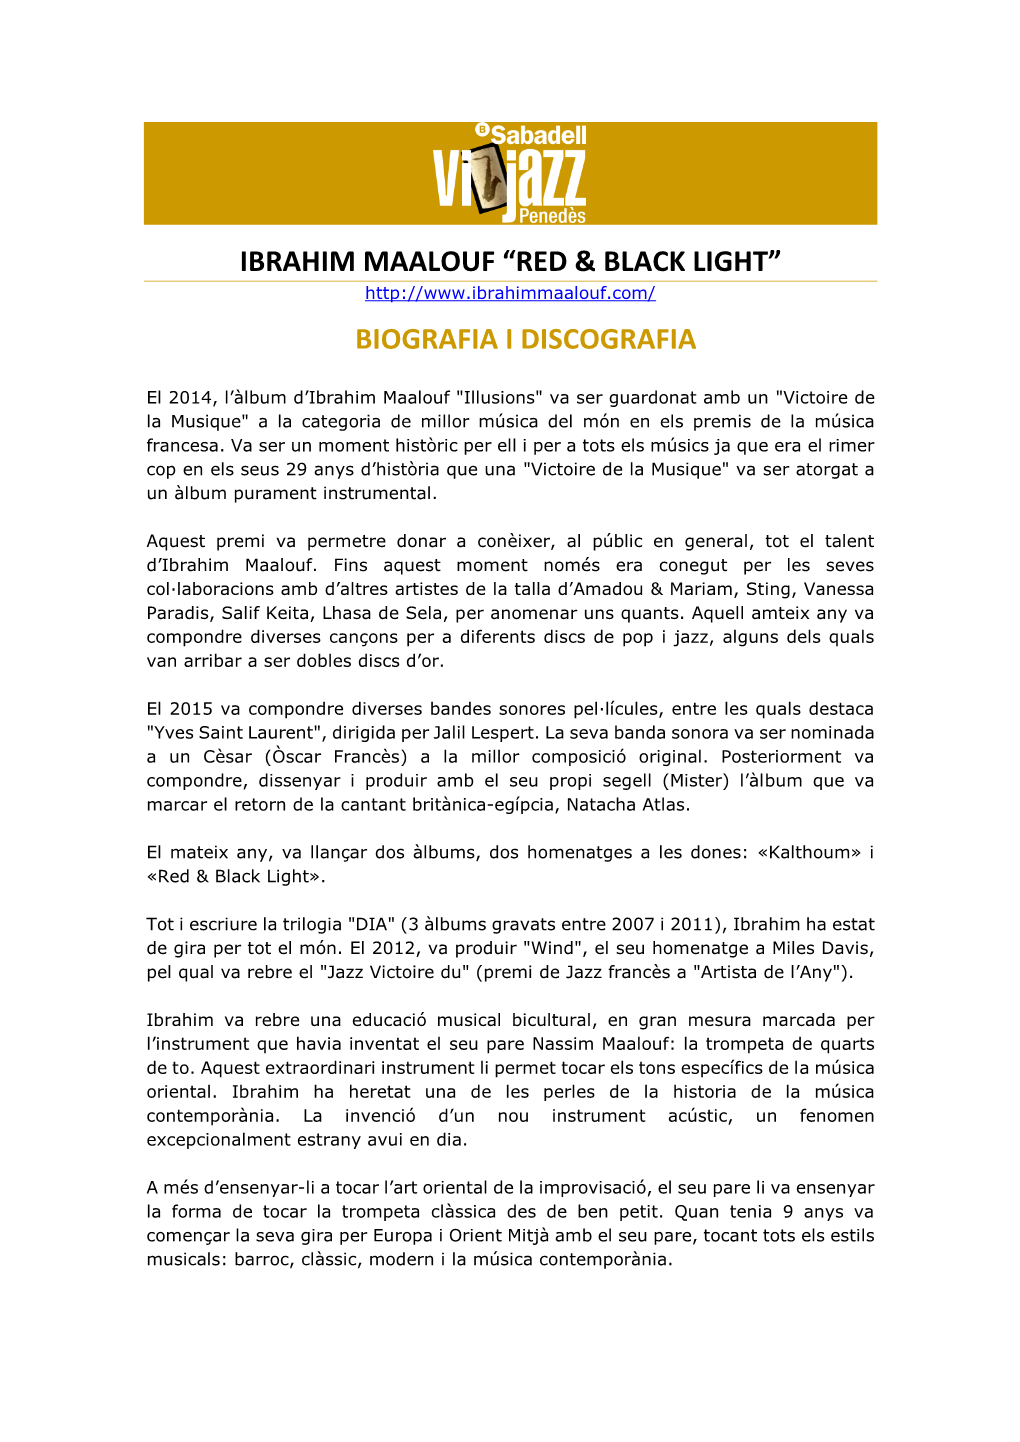 Ibrahim Maalouf “Red & Black Light”